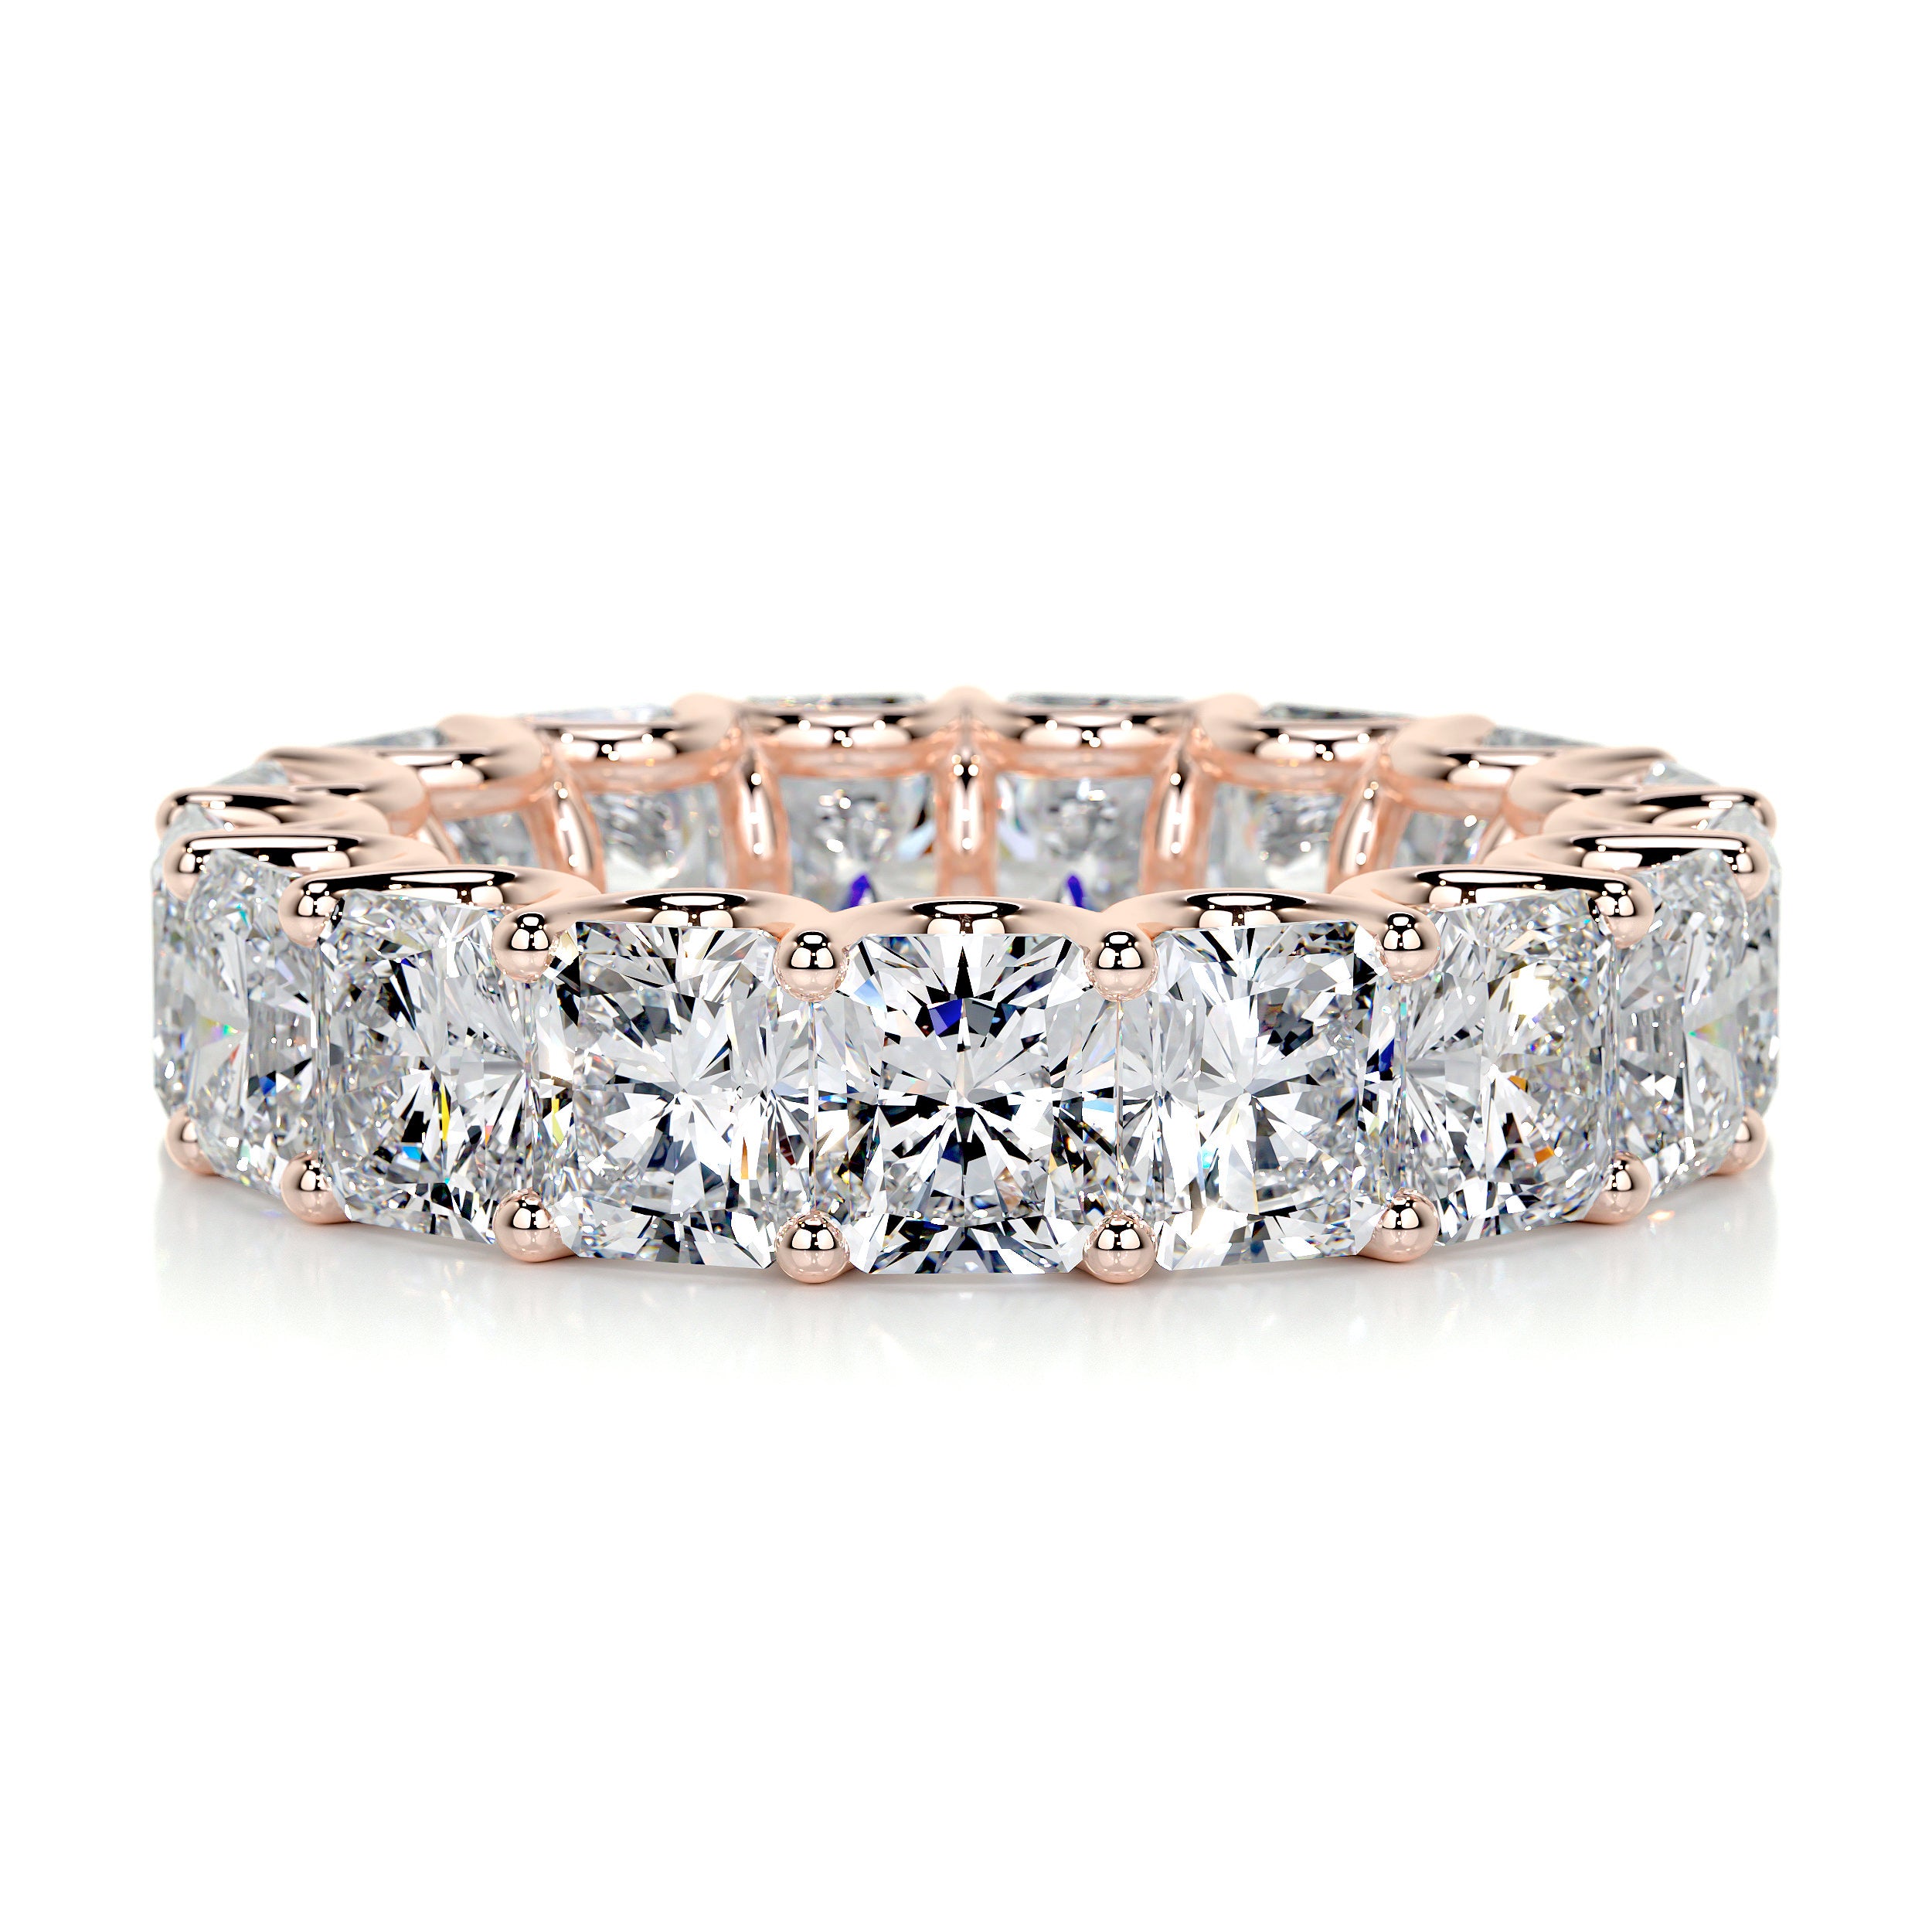 Andi Eternity Wedding Ring - 14K Rose Gold